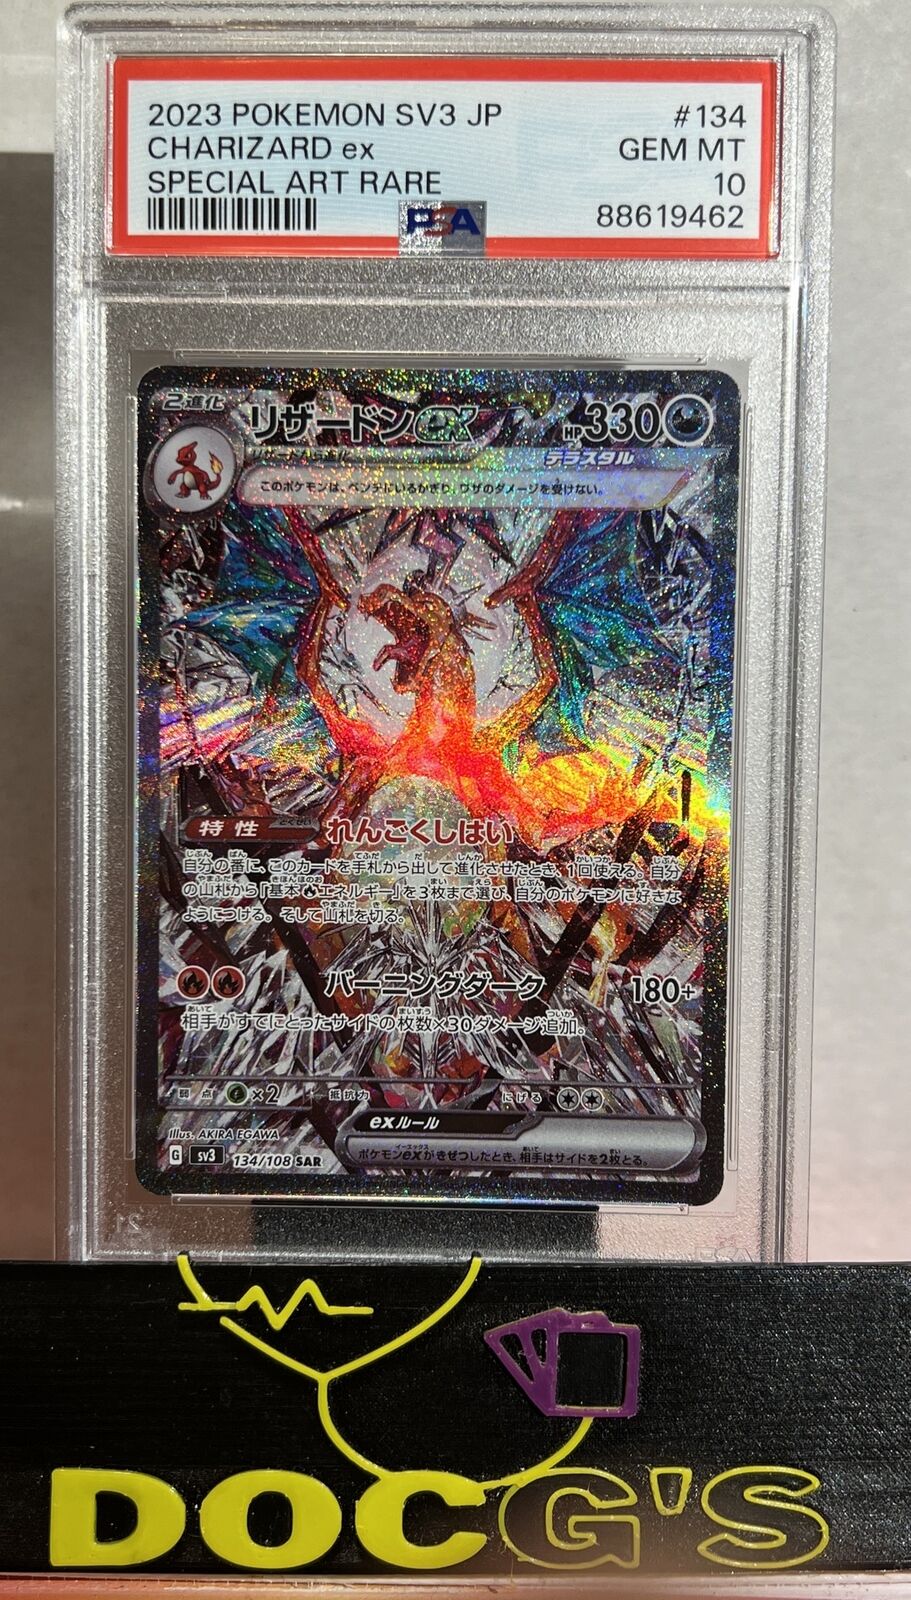 2023 134 Charizard ex Special Art Rare Pokemon TCG Card PSA 10 Gem Mint